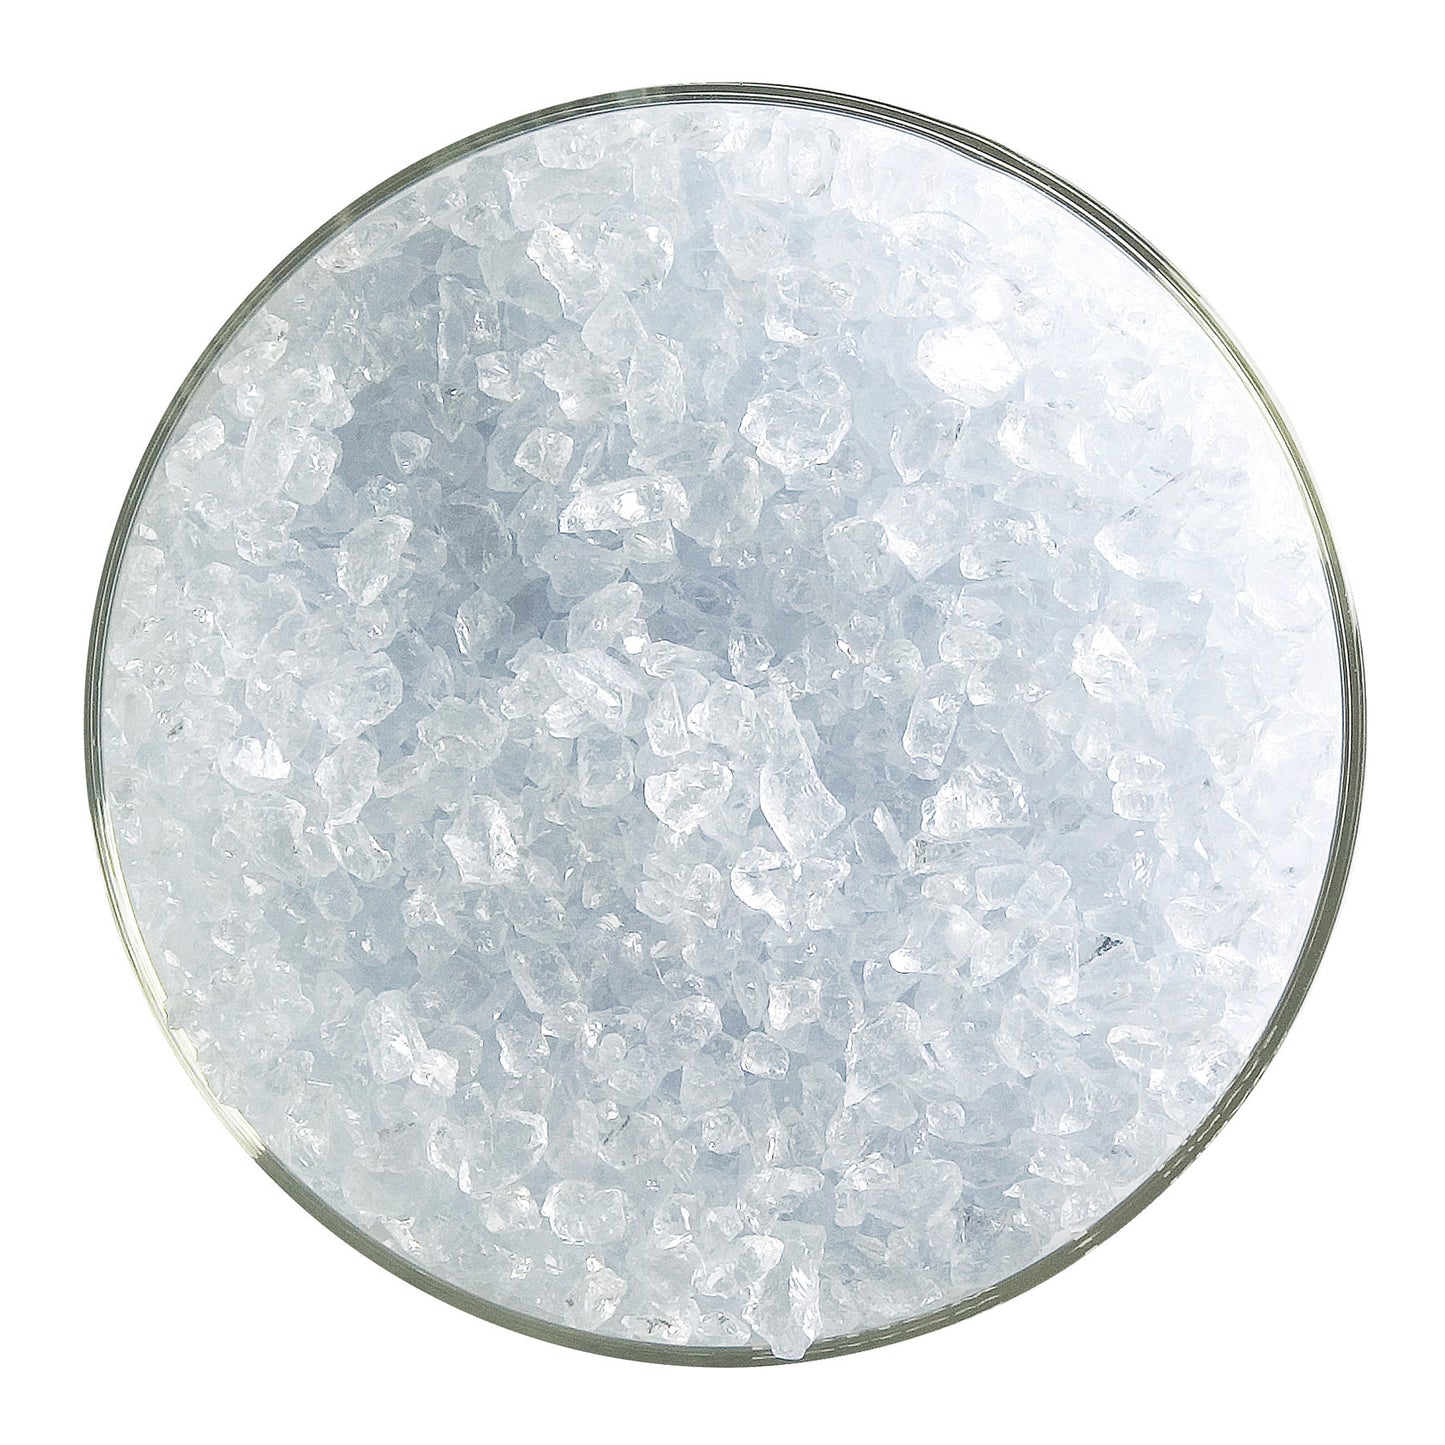 Reactive Ice (1009), Frit, Fusible, 5 oz. jar